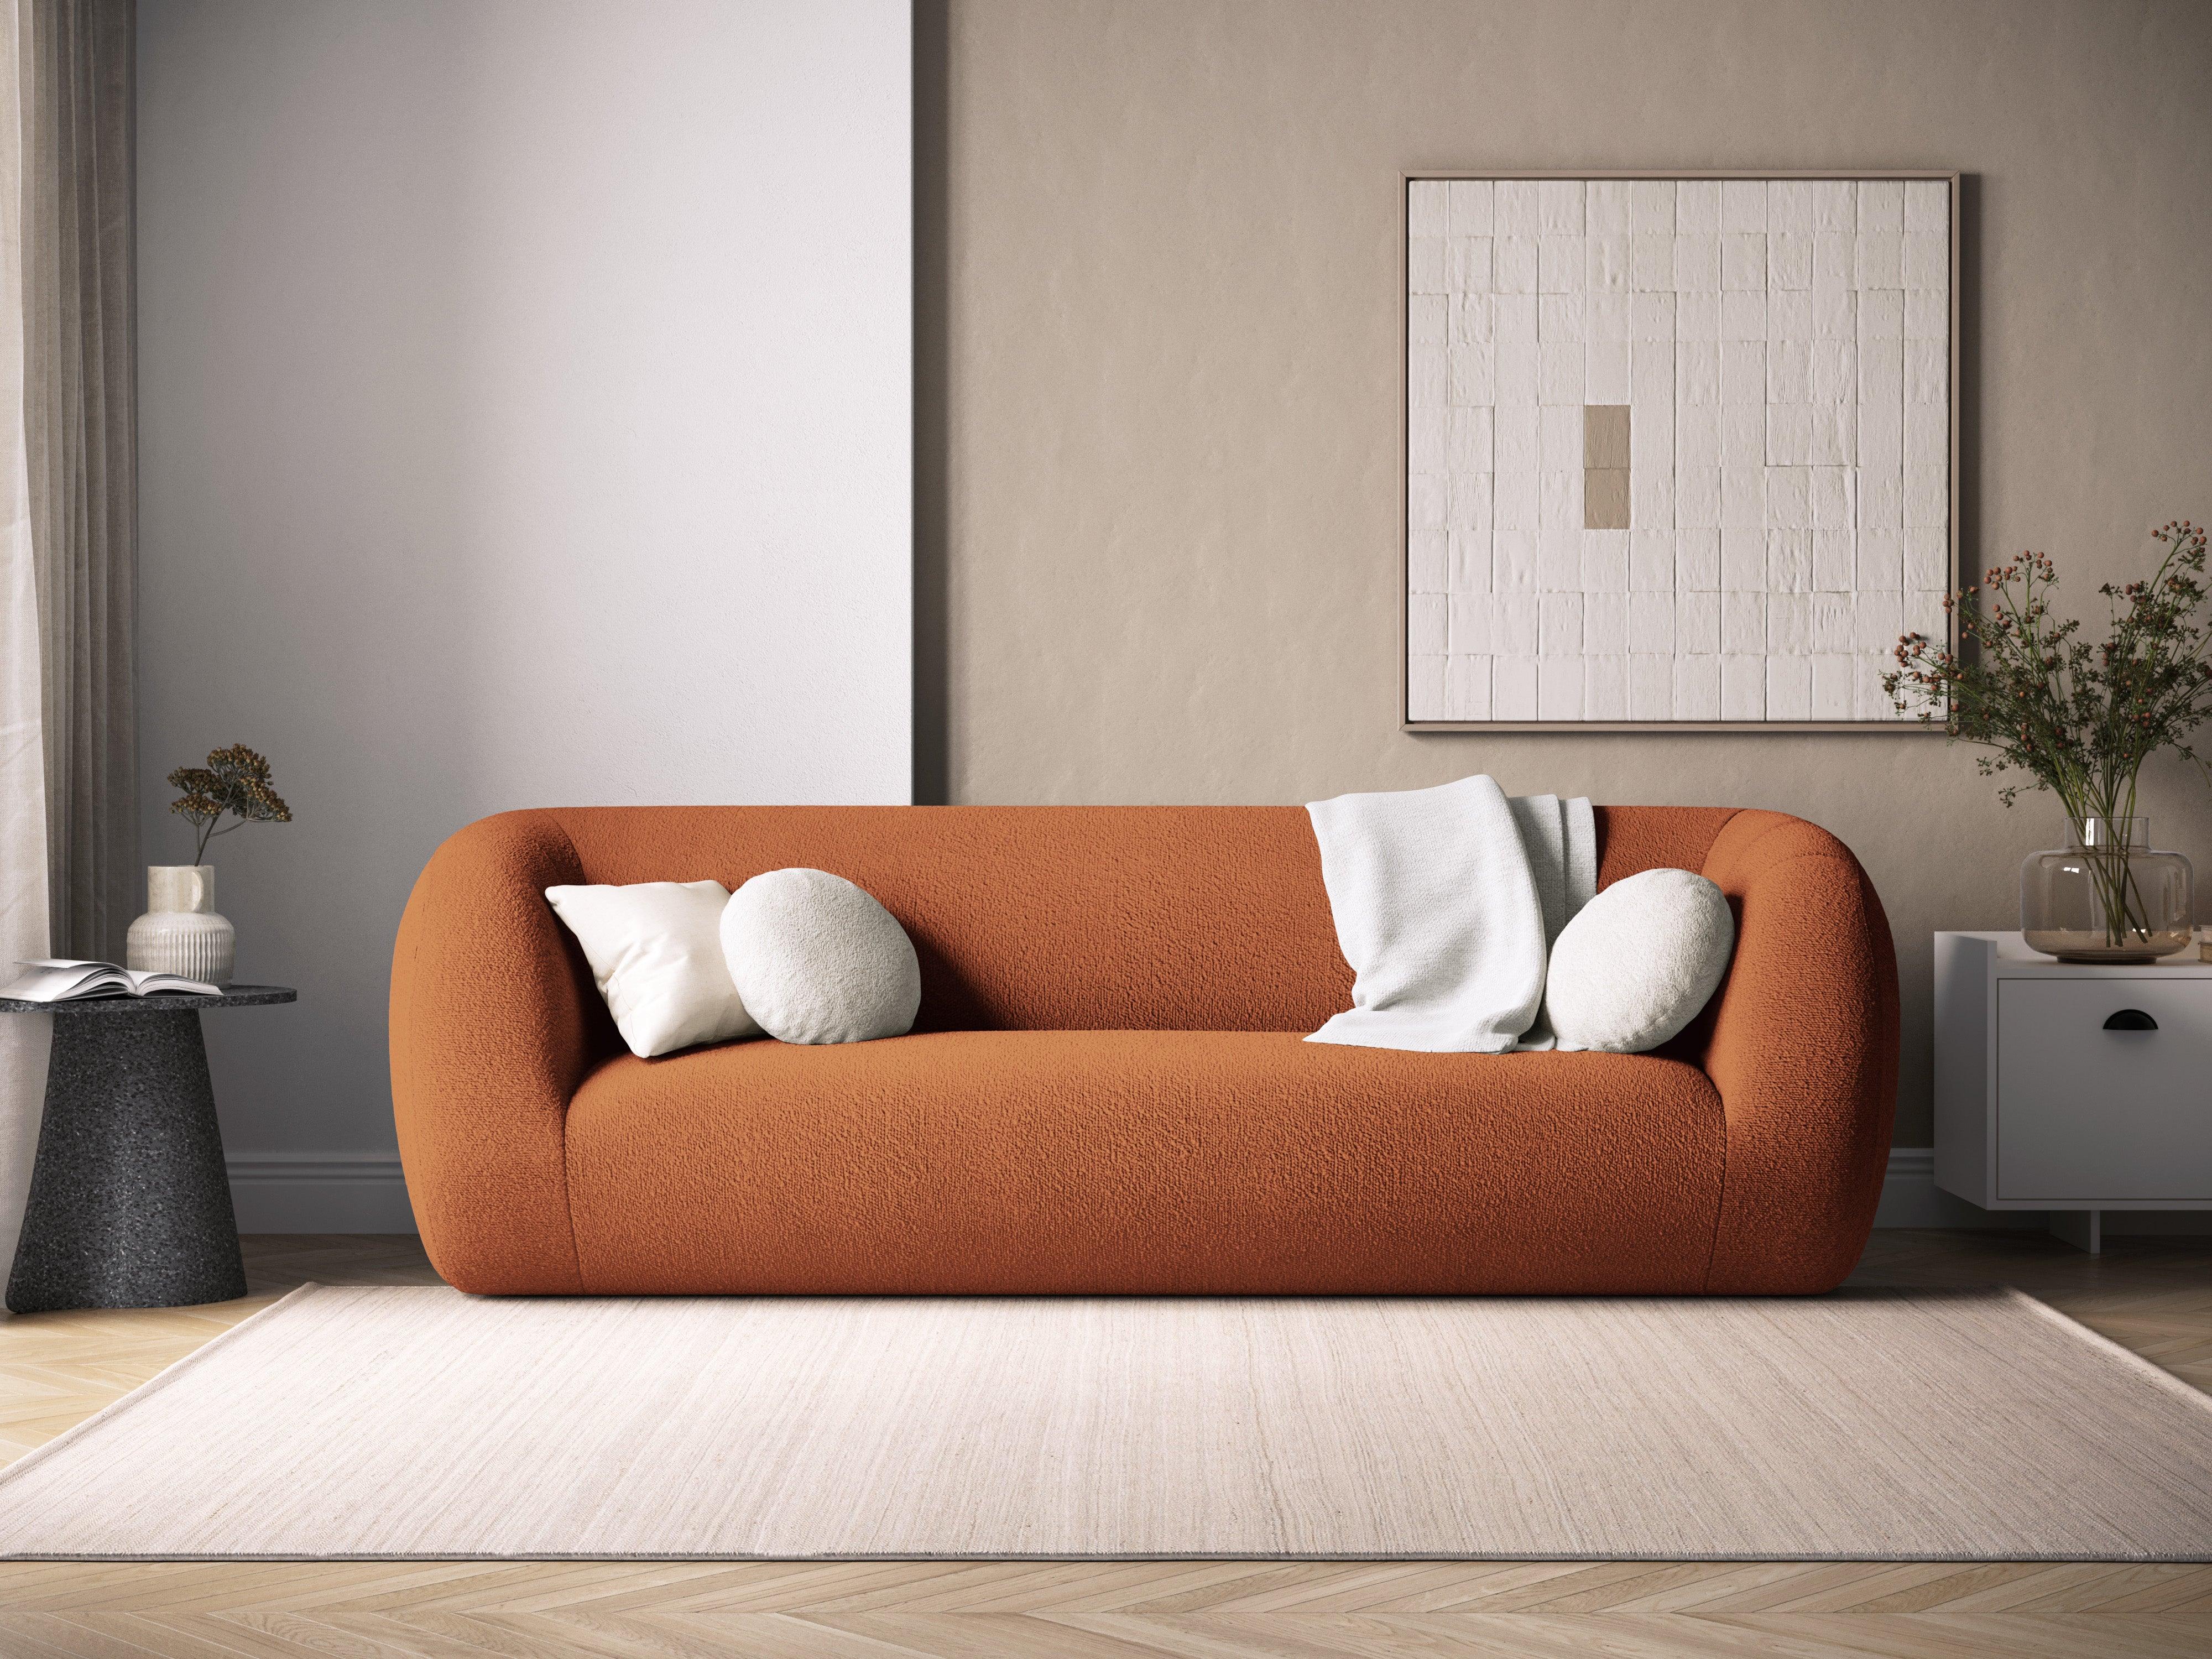 Sofa 3-osobowa ESSEN terracotta boucle Cosmopolitan Design    Eye on Design